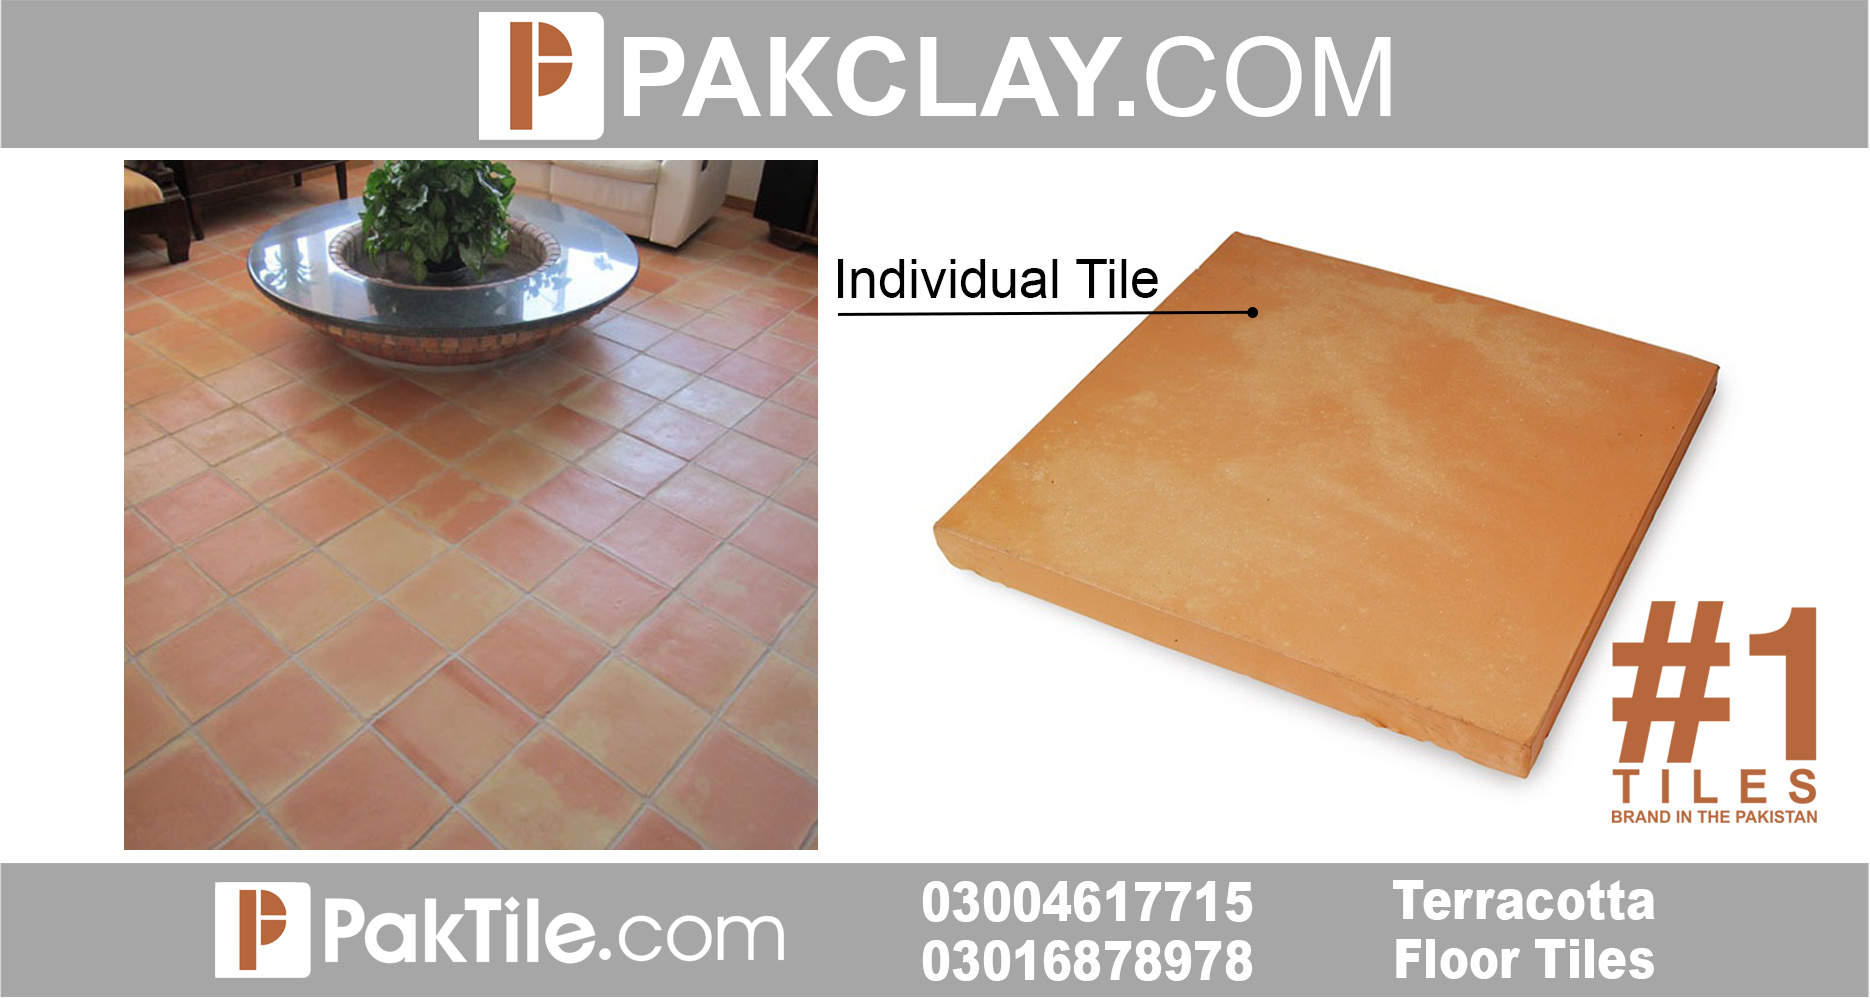 Terracotta Floor Tiles Price in Lahore